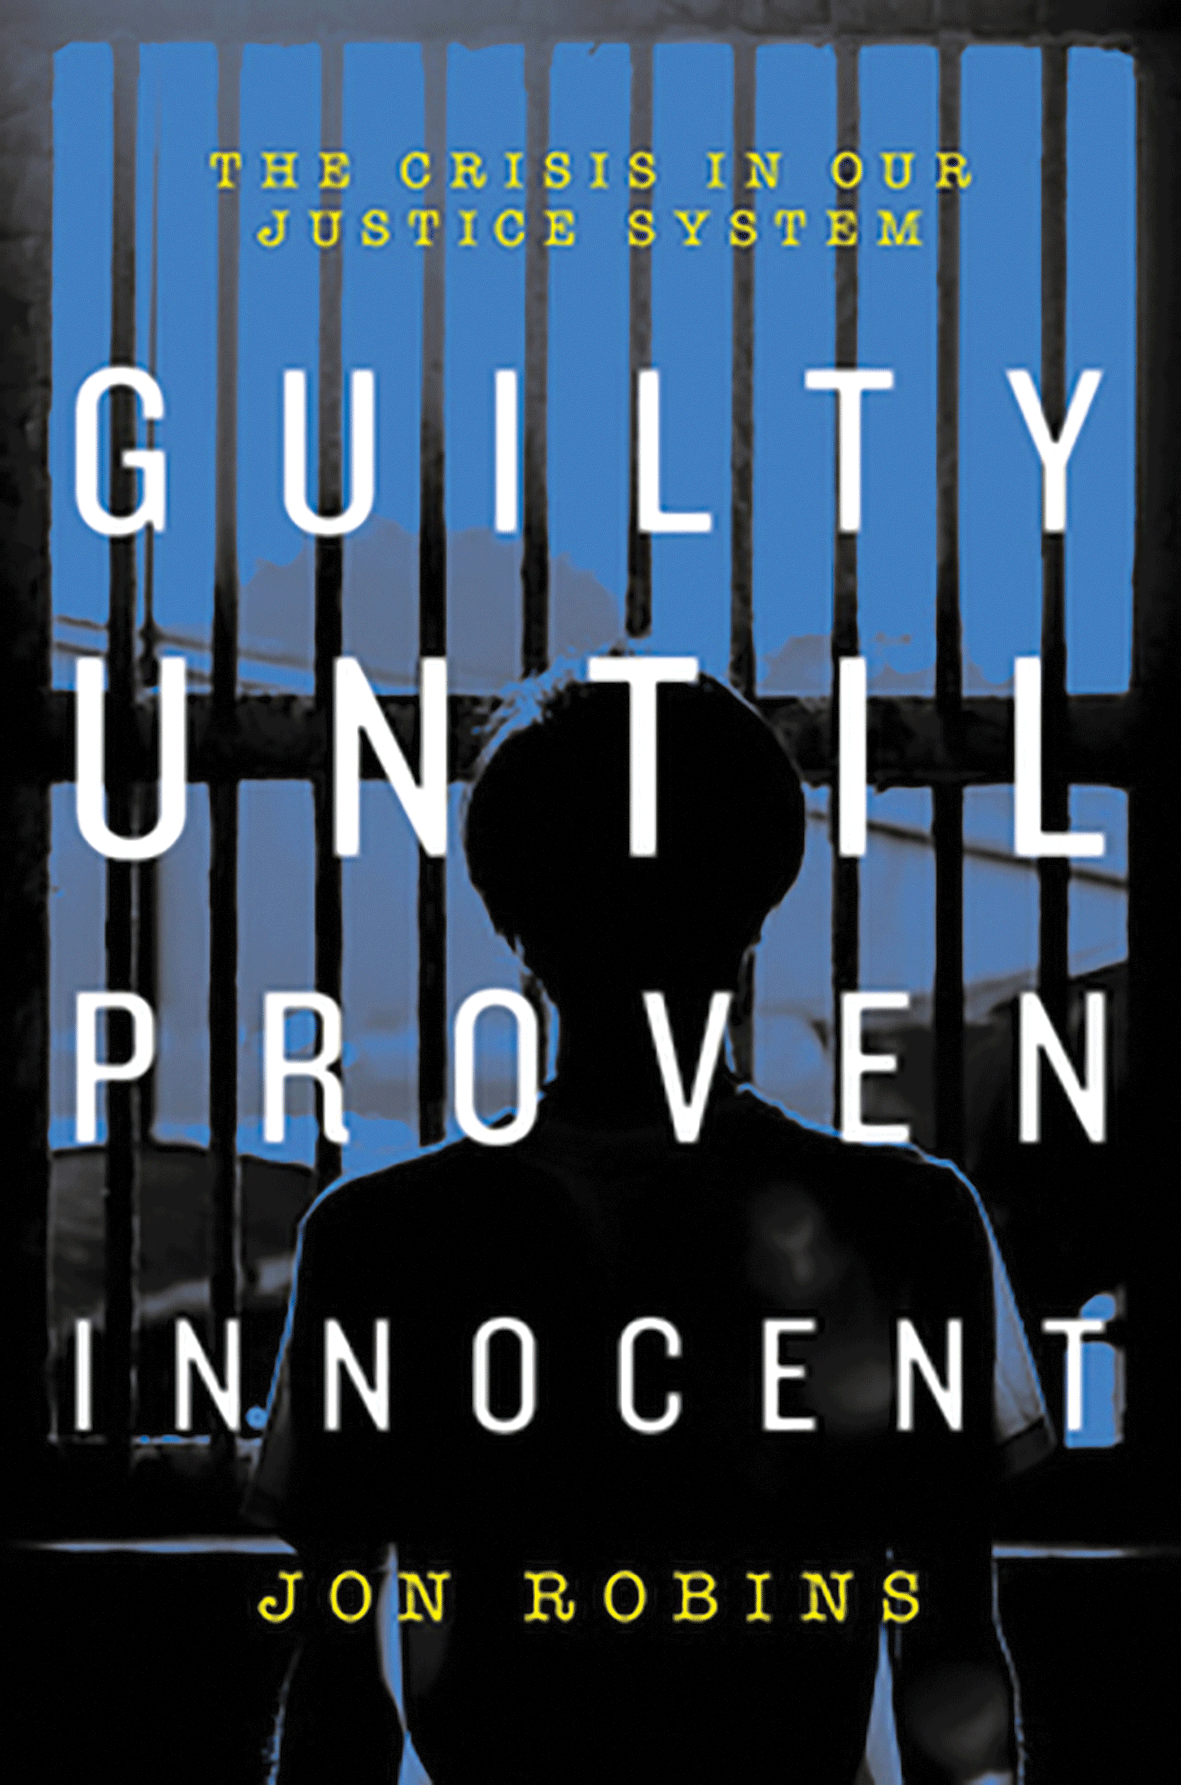 Guilty until innocent